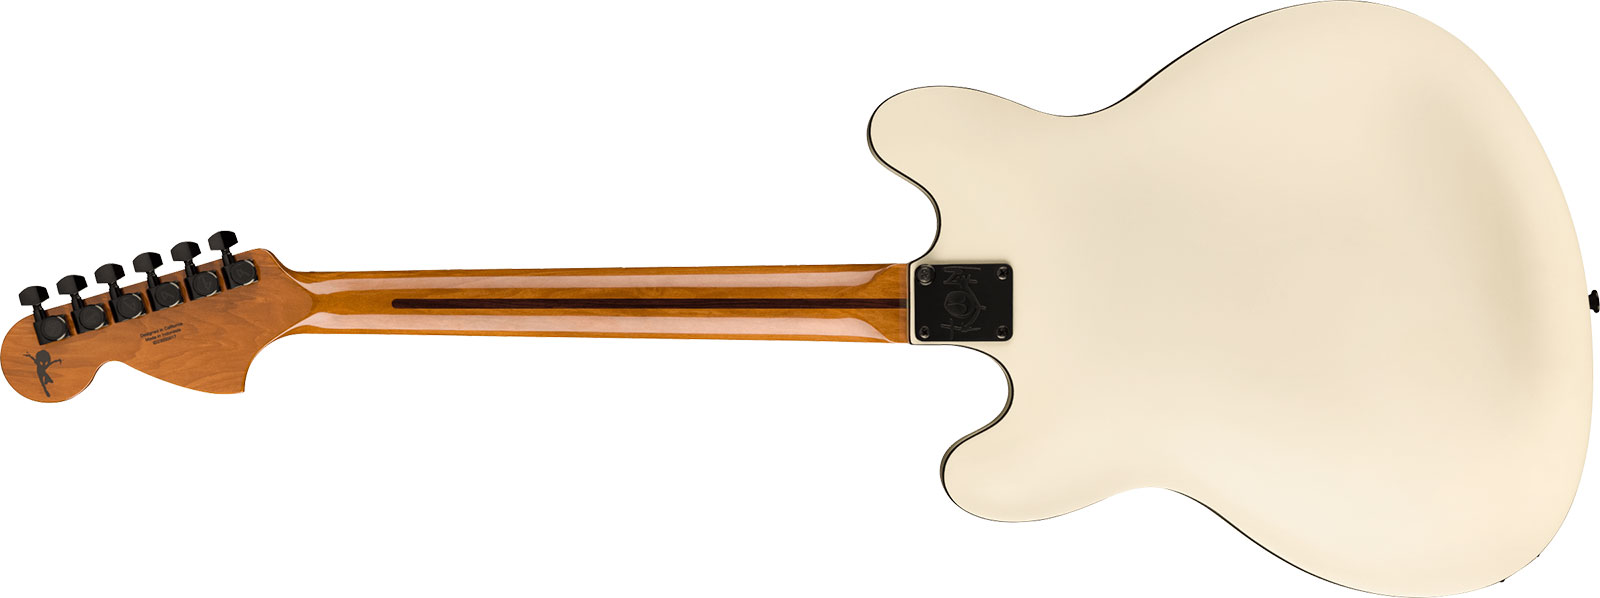 Fender Tom Delonge Starcaster Signature 1h Seymour Duncan Ht Rw - Satin Olympic White - Semi-Hollow E-Gitarre - Variation 1